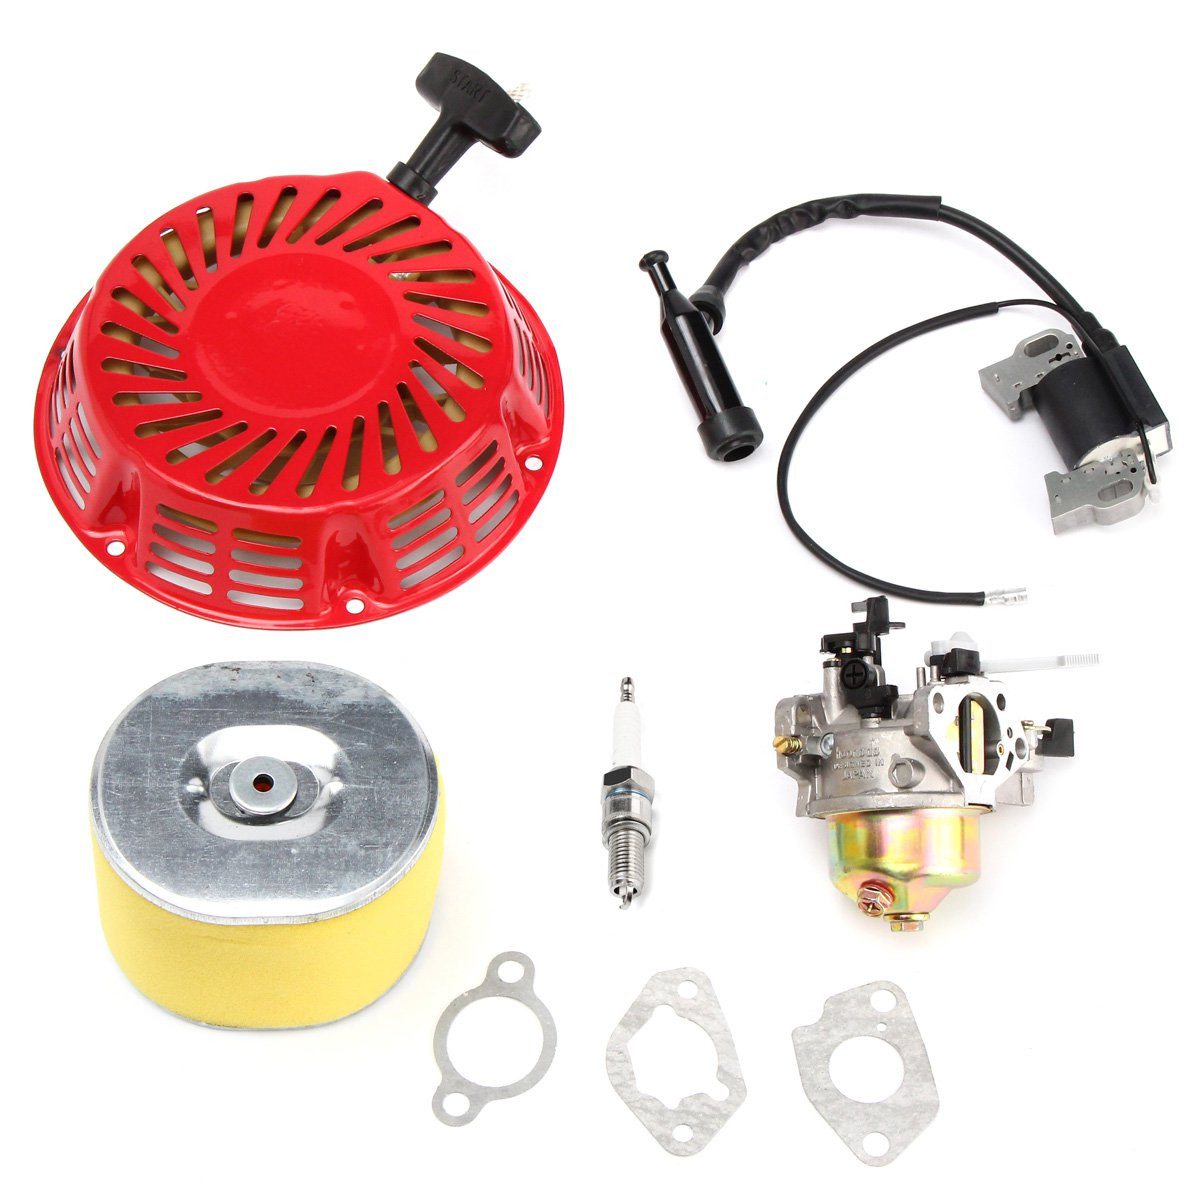 Recoil Carburetor Ignition Coil Spark Plug Air Filter Kit For Honda GX240 GX270 